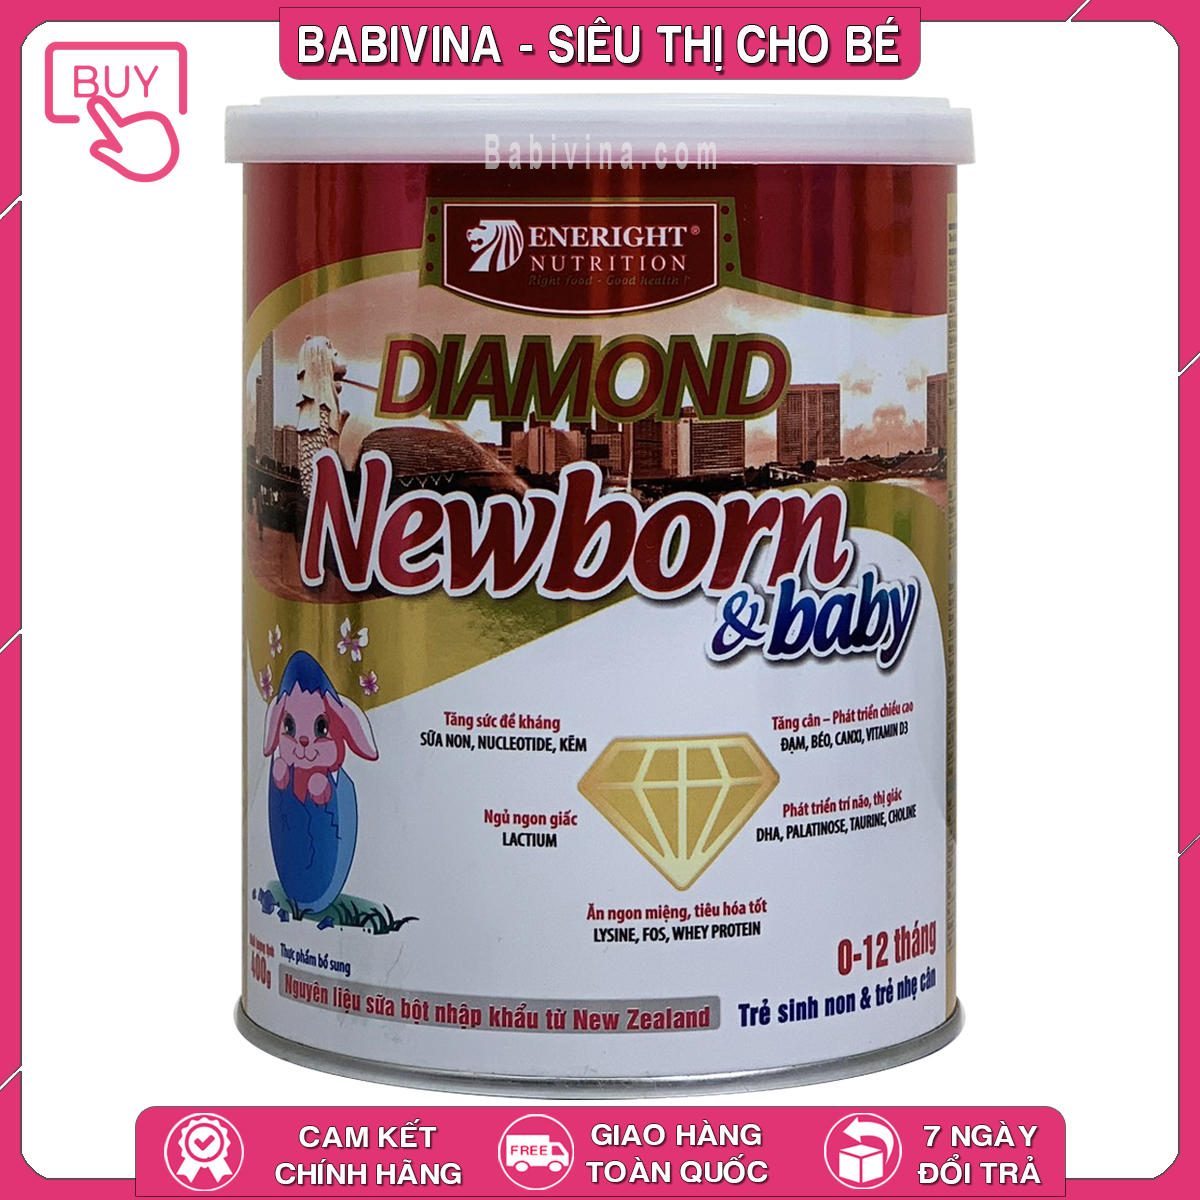 CHÍNH HÃNG Sữa Diamond Newborn Baby 400g 0-12 tháng newbornbaby - Nutrient